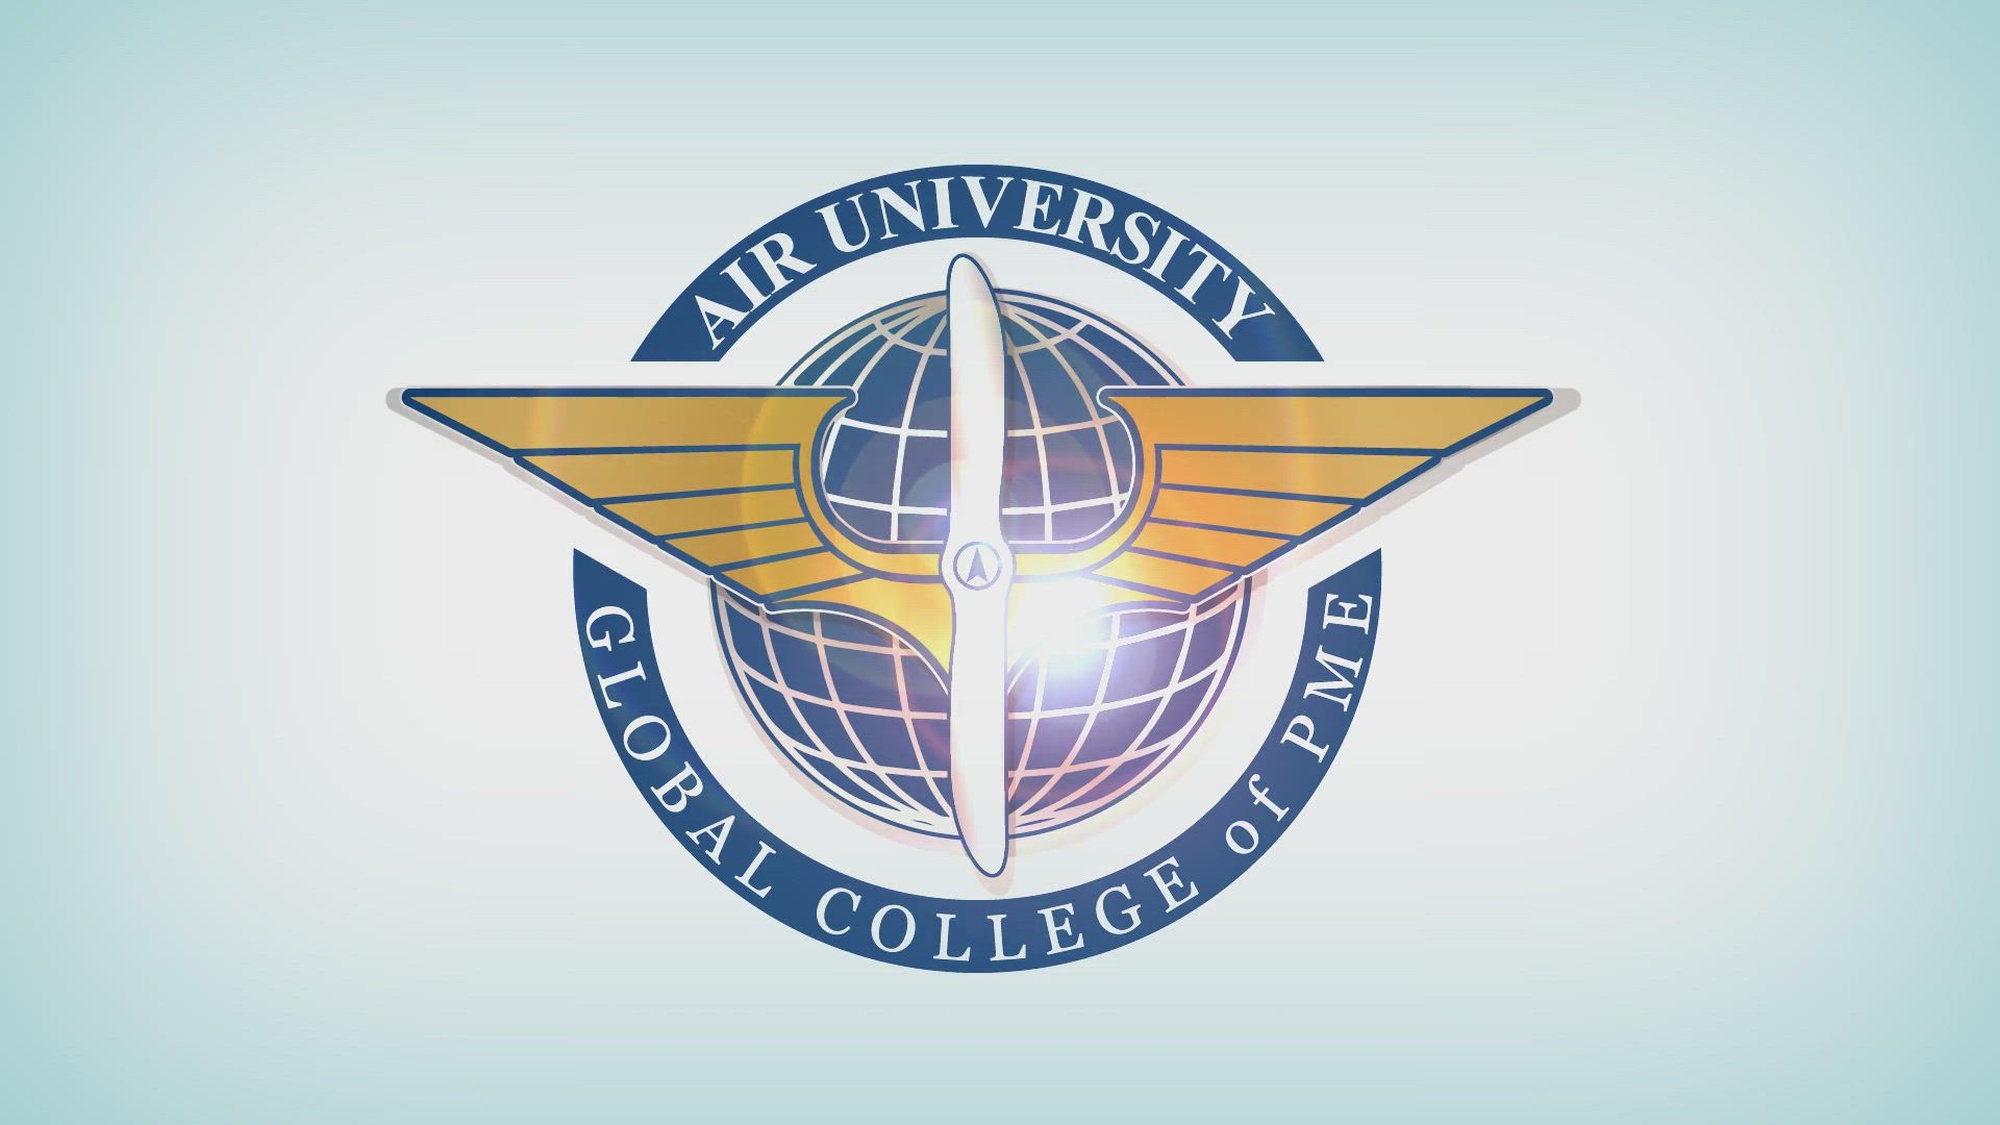 For more information on the eSchool of Graduate PME, visit https://www.airuniversity.af.edu/eSchool.